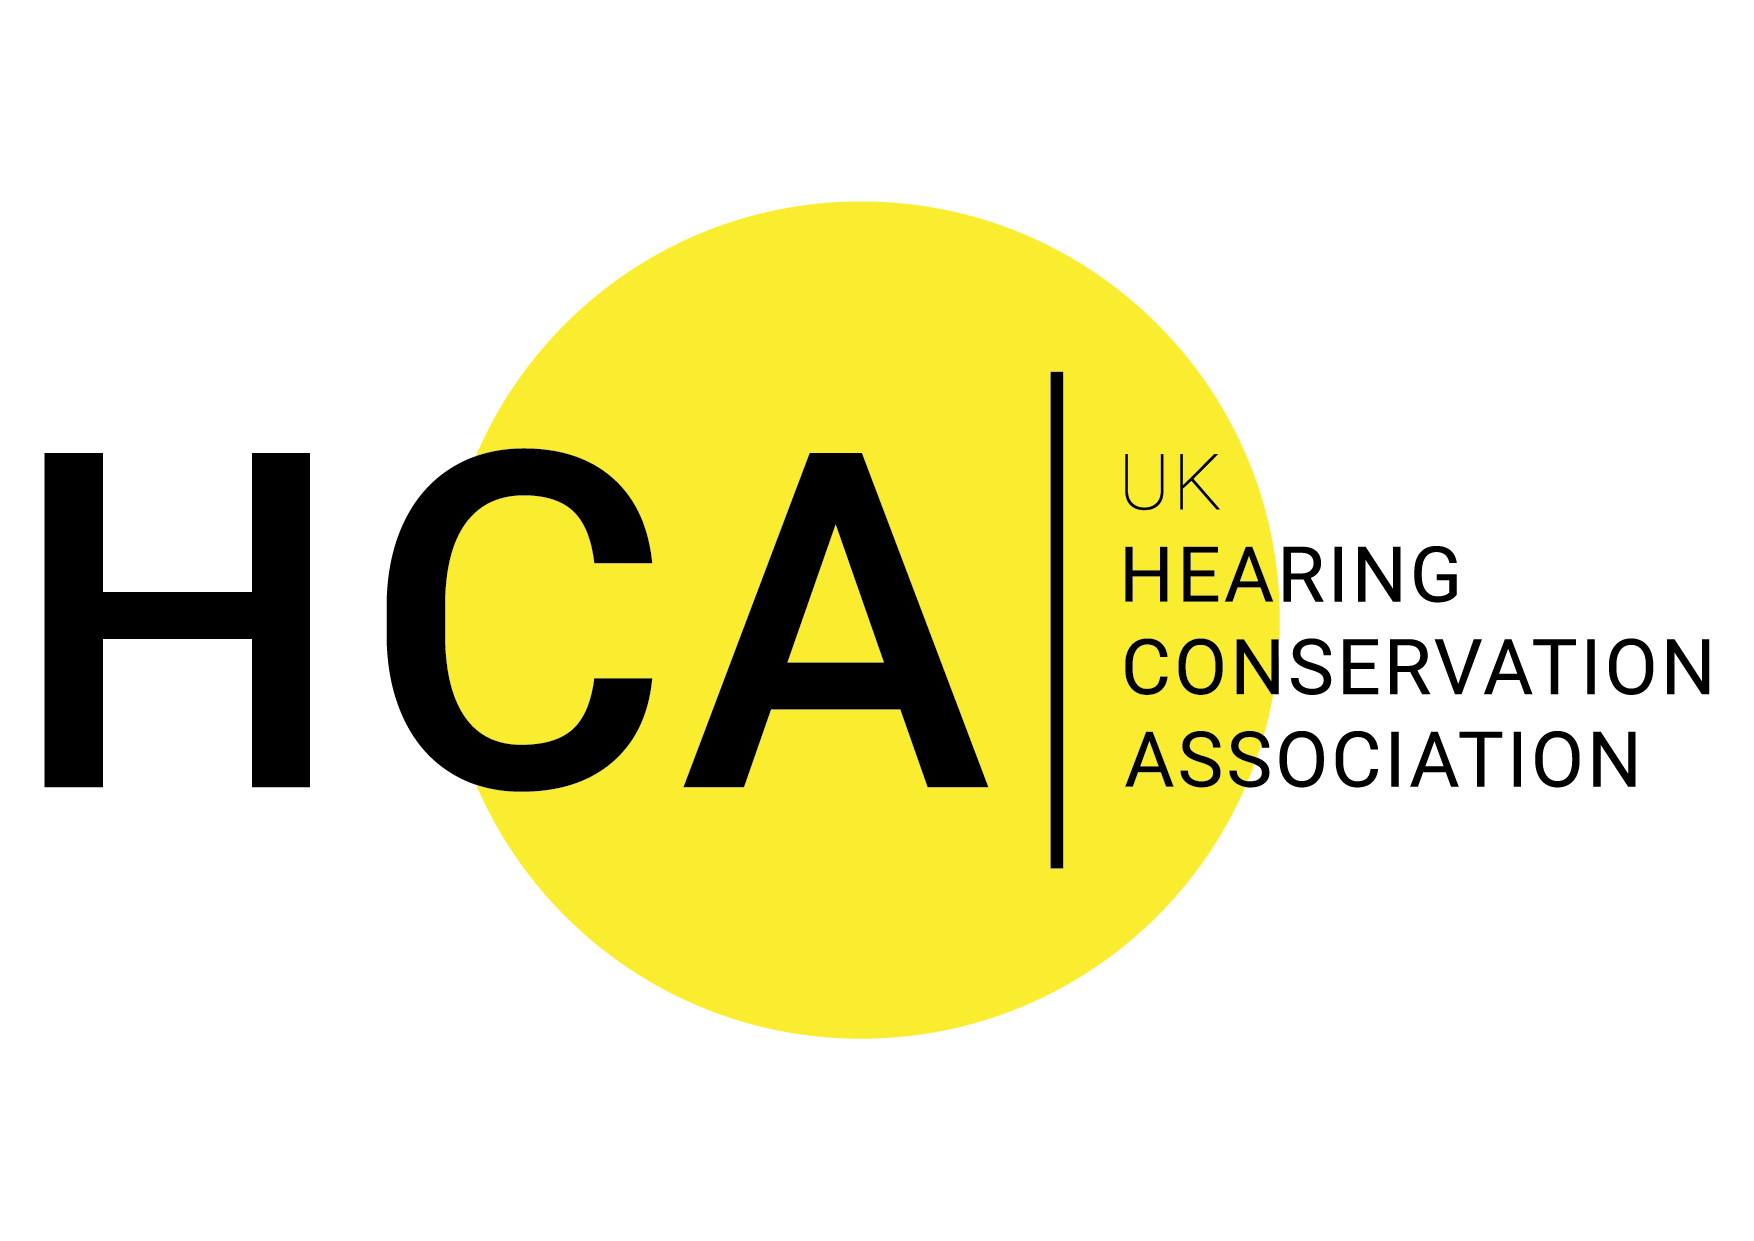 UK Hearing Conservation Association